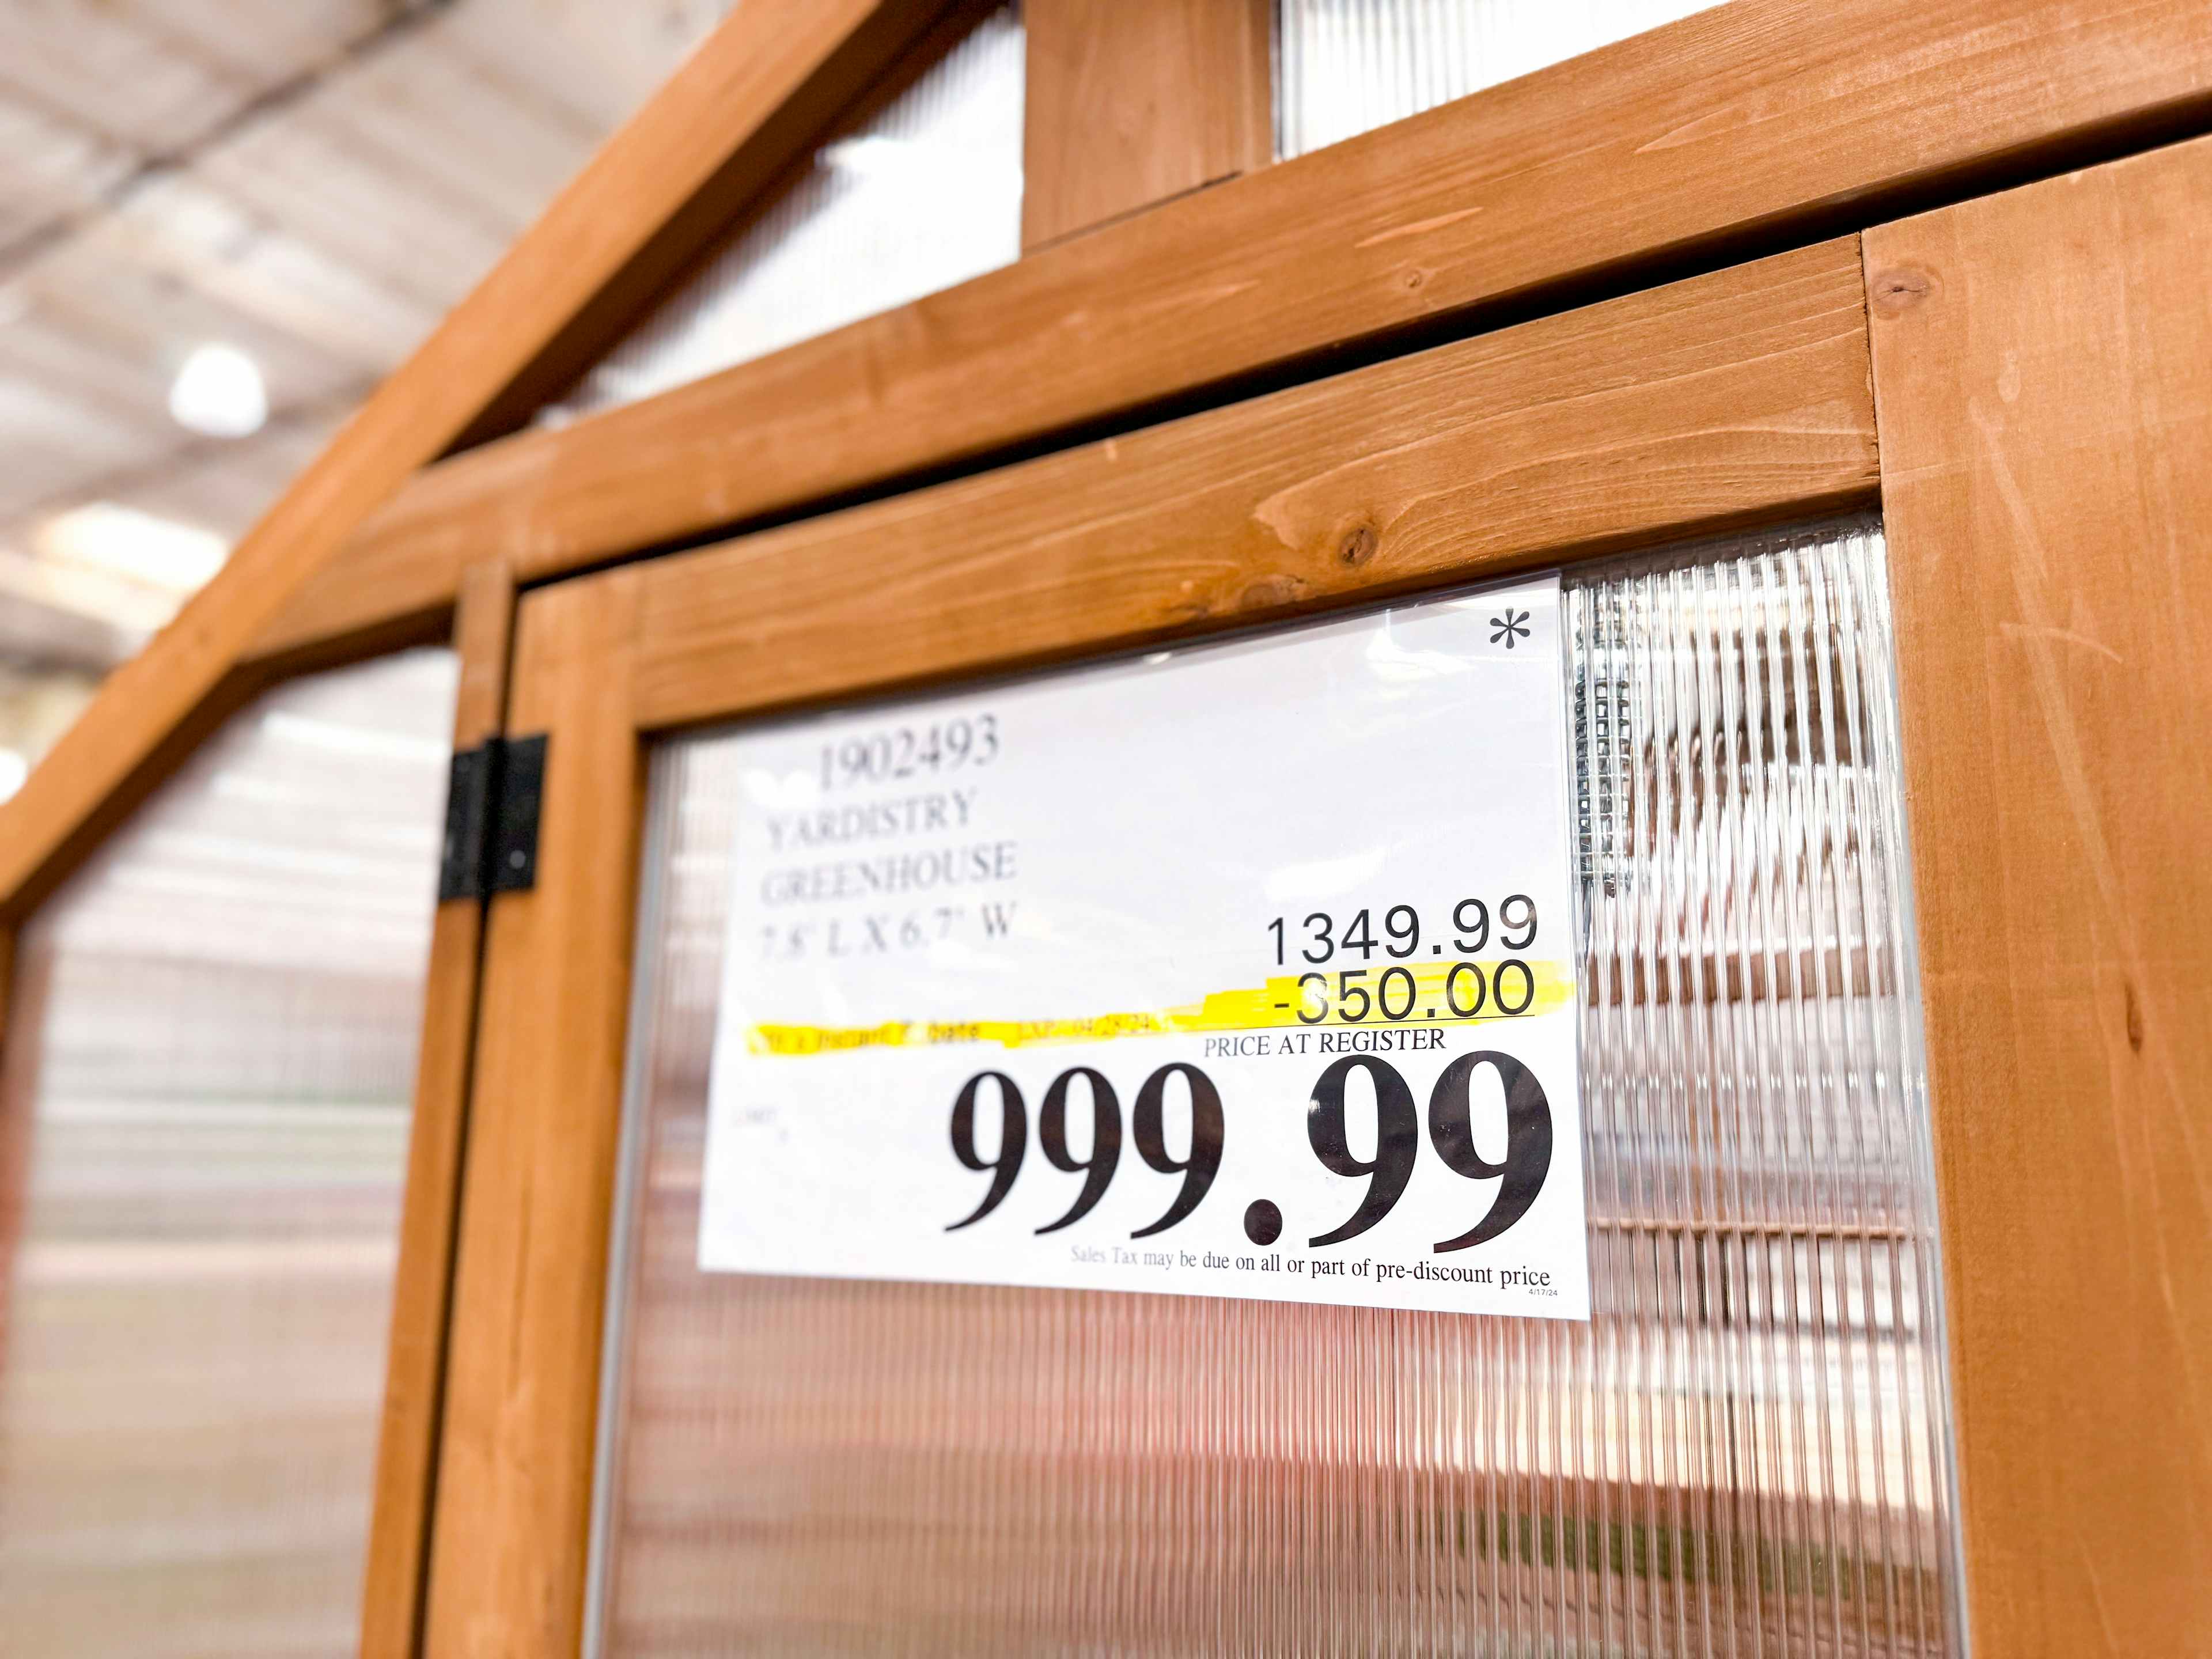 costco yardistry greenhouse price tag